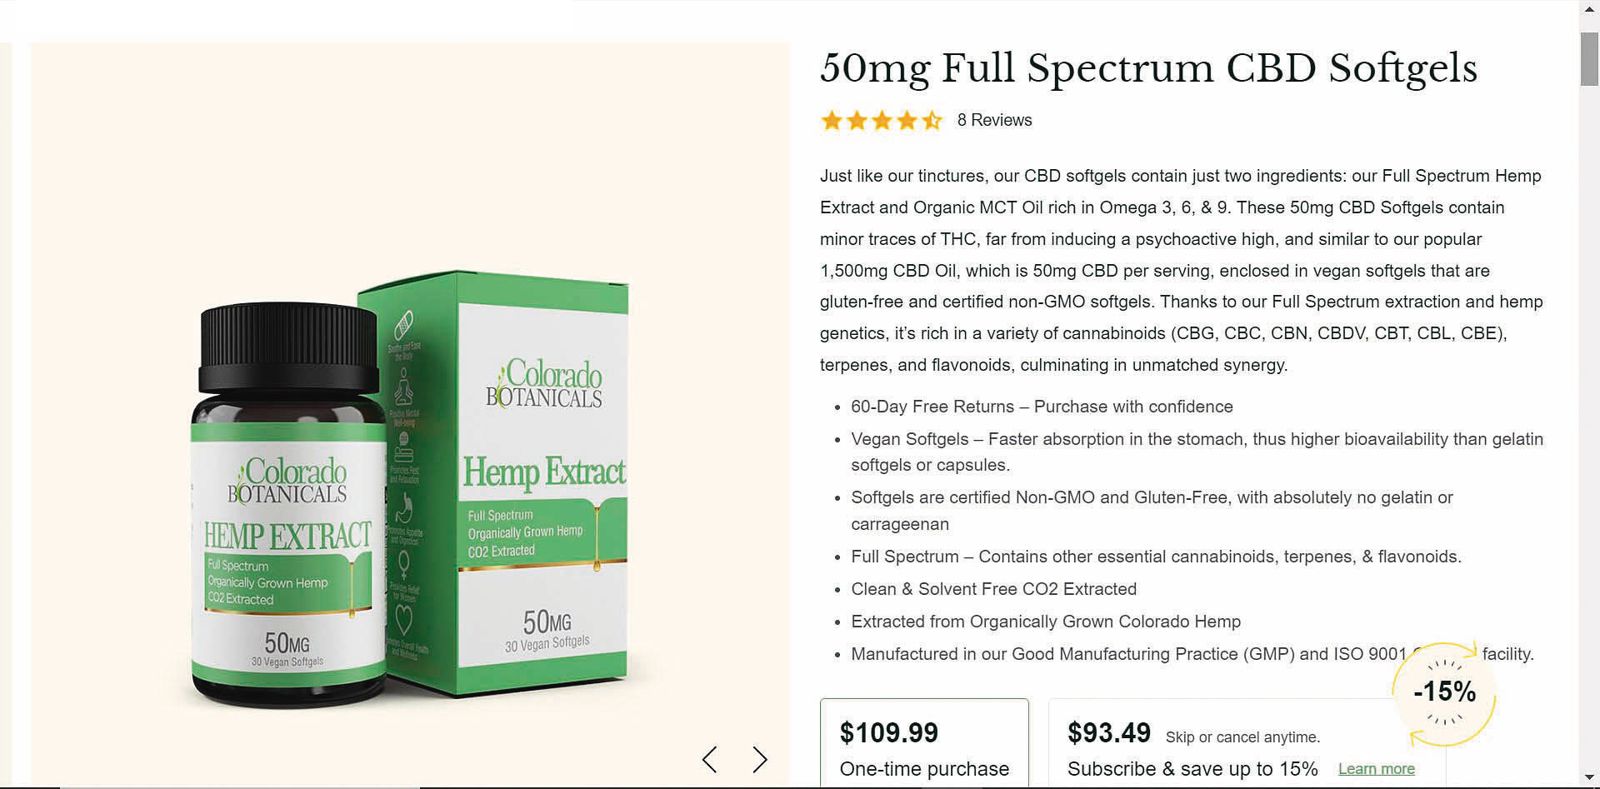 「Colorado Botanicals」的「Hemp Extract」膠囊含有大麻，也是殷琪買的物品。（圖／鏡週刊提供）